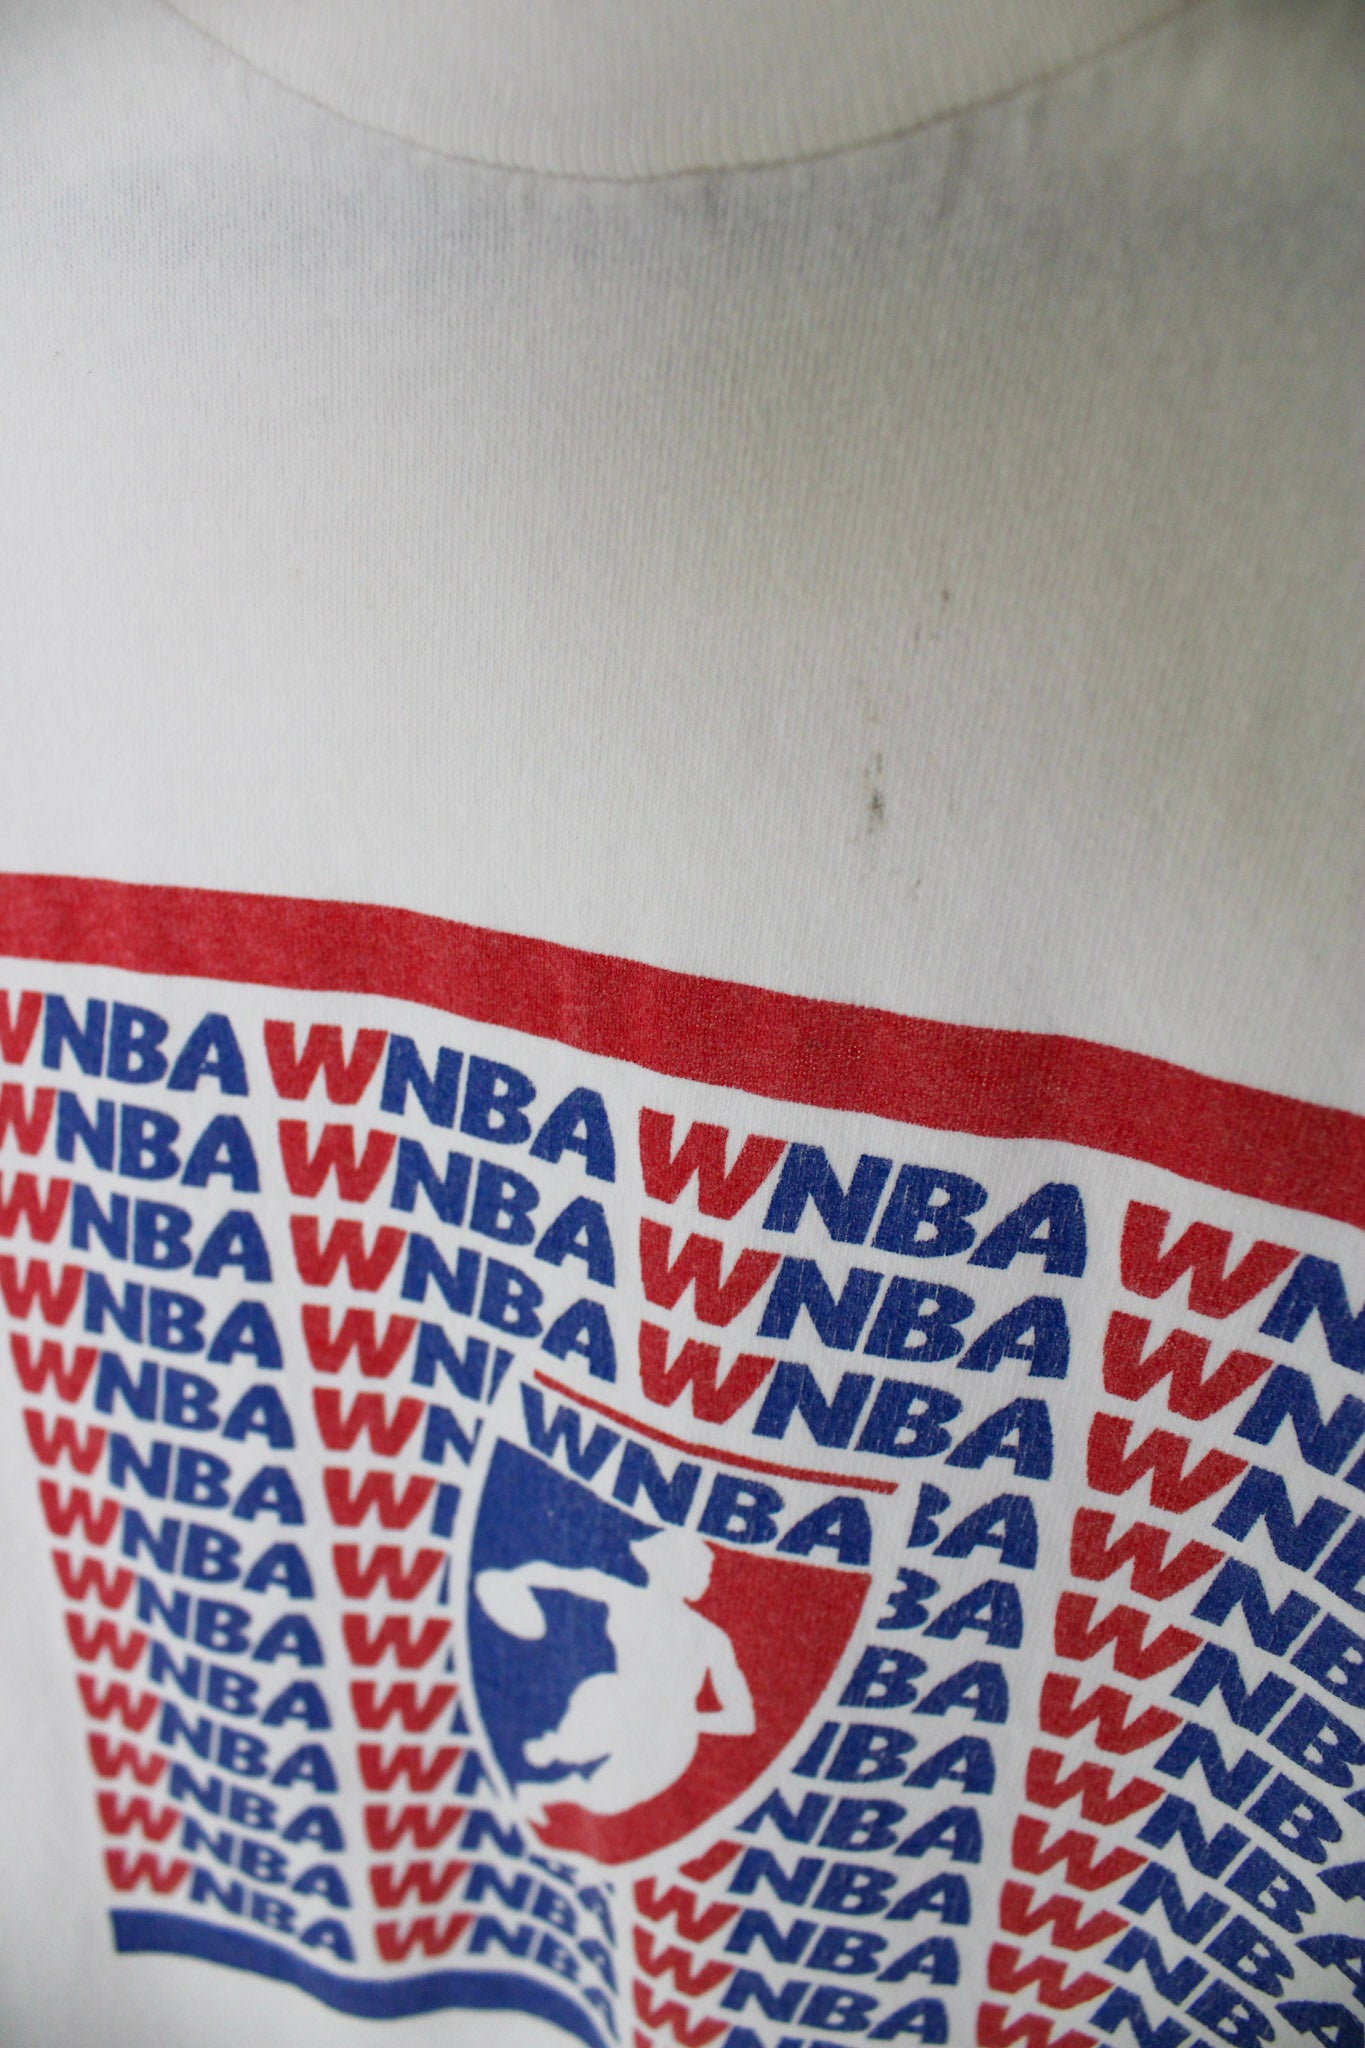 Vintage WNBA Champion 90s Logo Tee